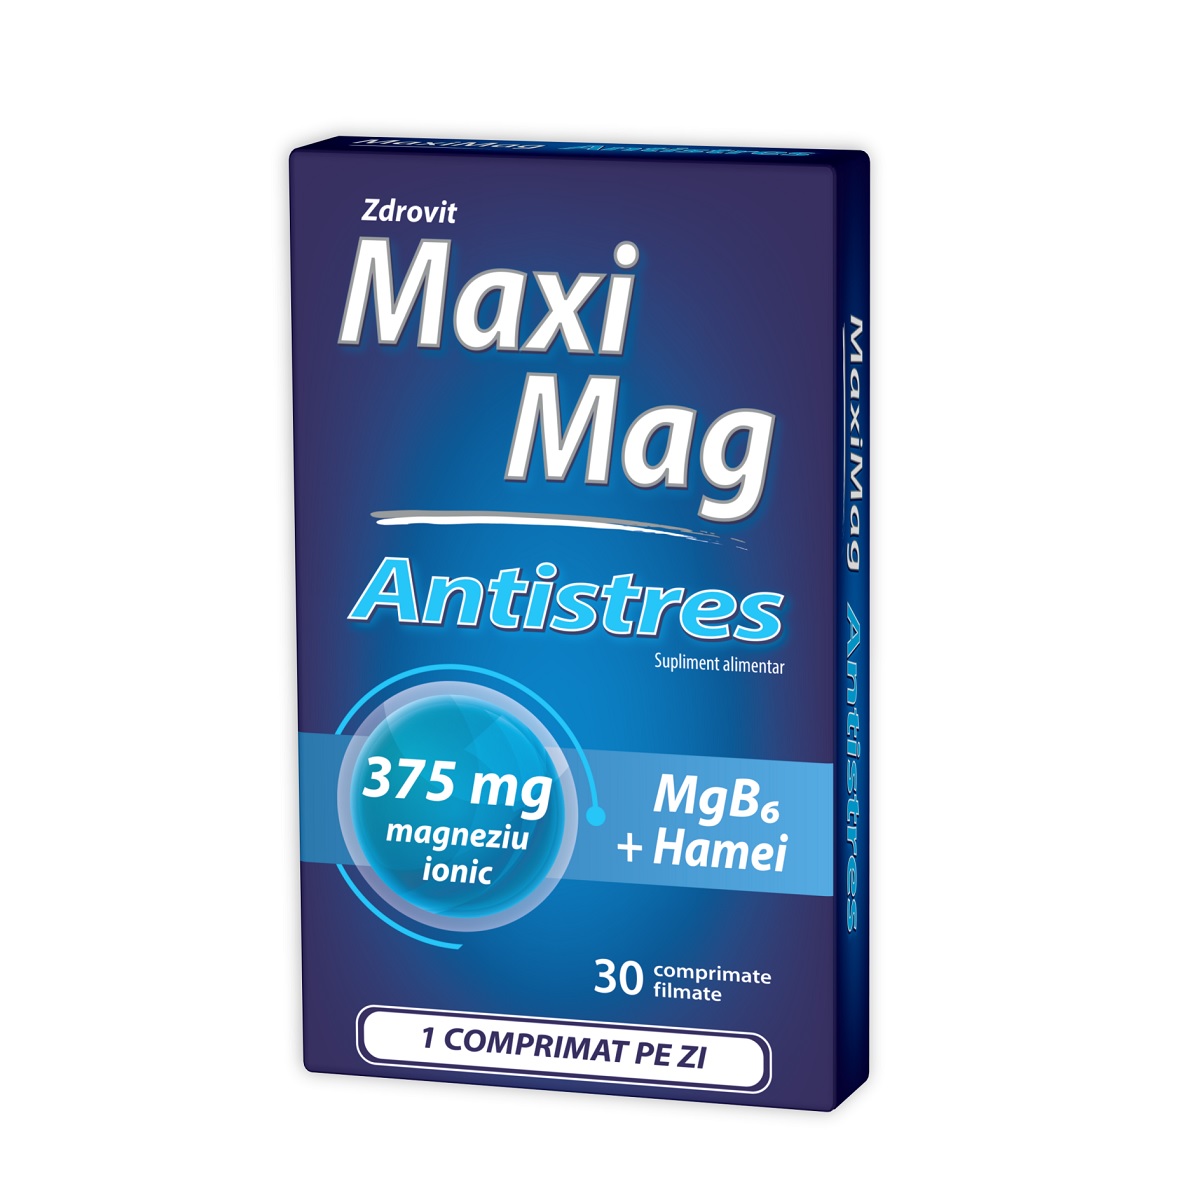 Uz general - MaxiMag Antistres 375 mg, 30 comprimate, Zdrovit, sinapis.ro